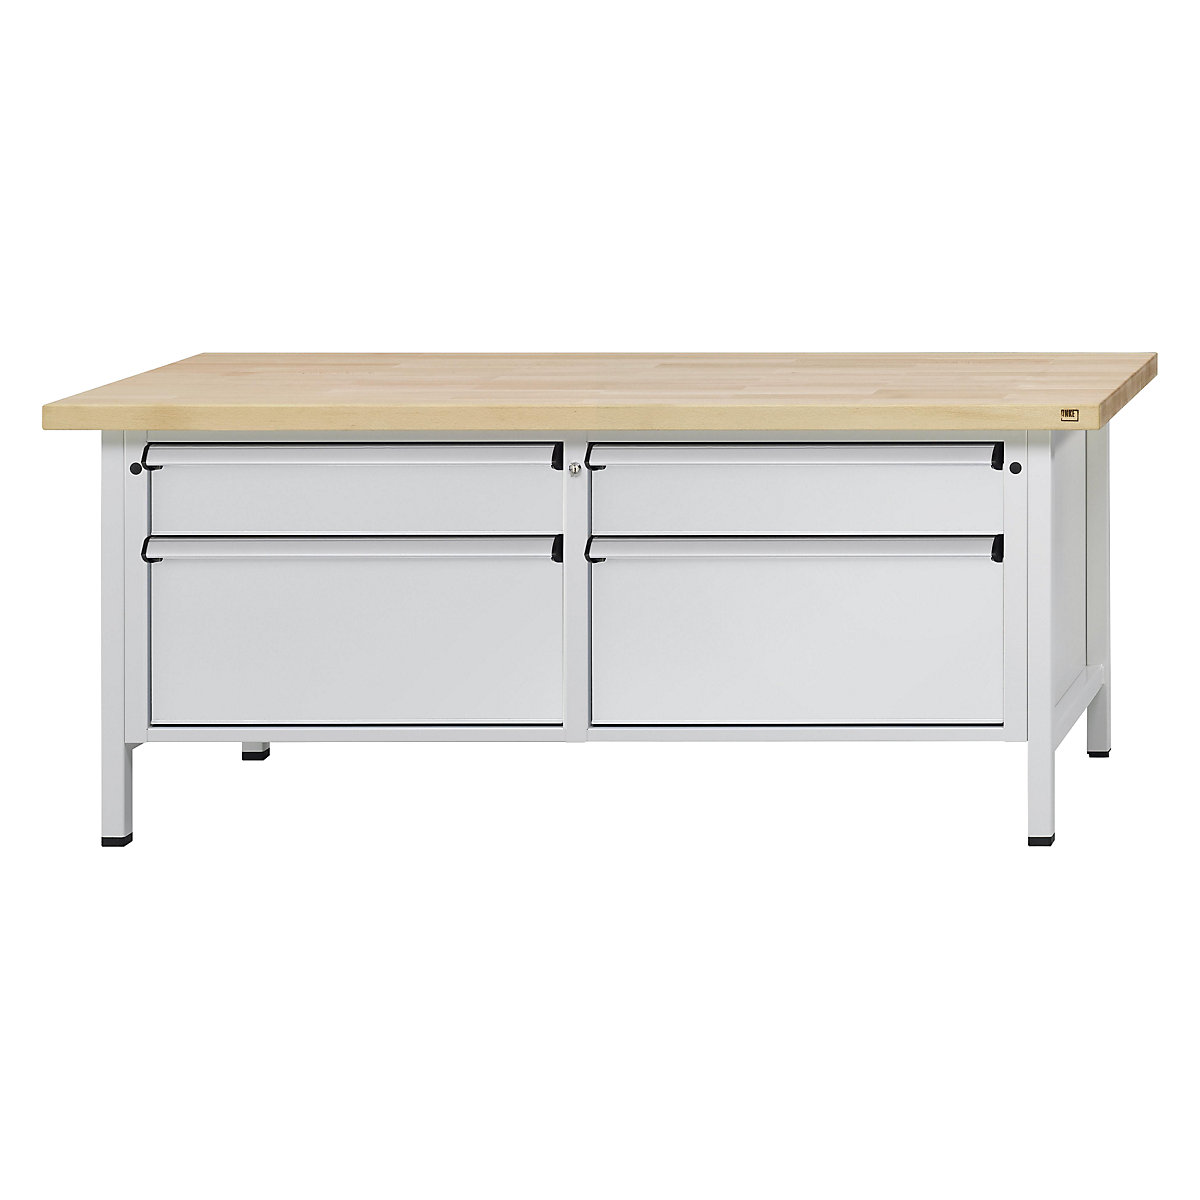 Workbench with XL/XXL drawers, frame construction - ANKE